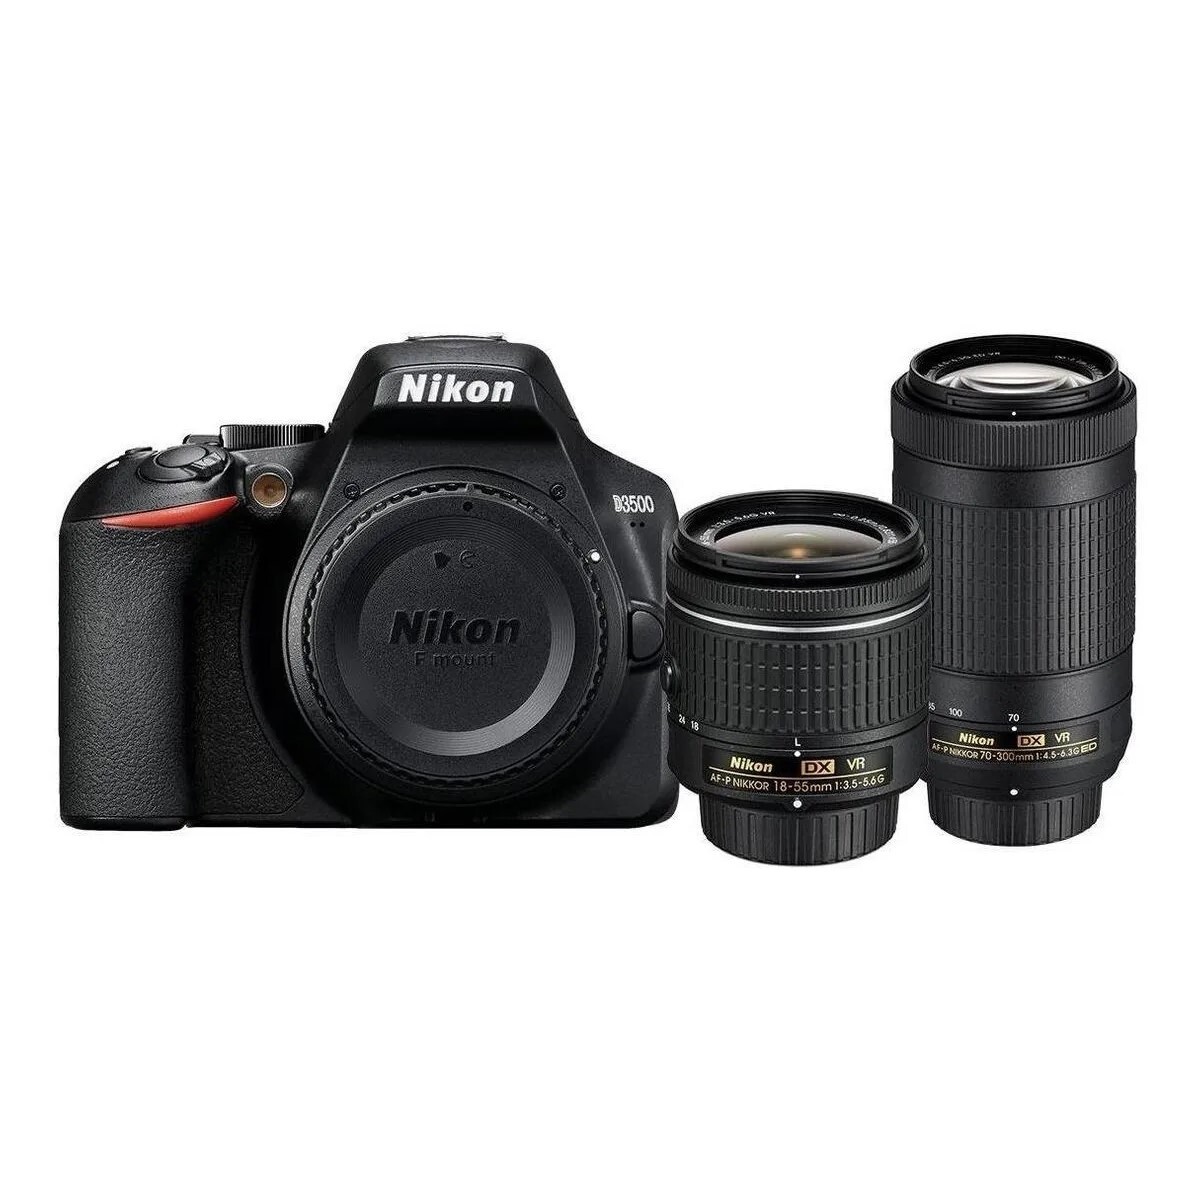 Kit cámara digital nikon d3500 + lente 18-55mm + lente 70-300mm Black